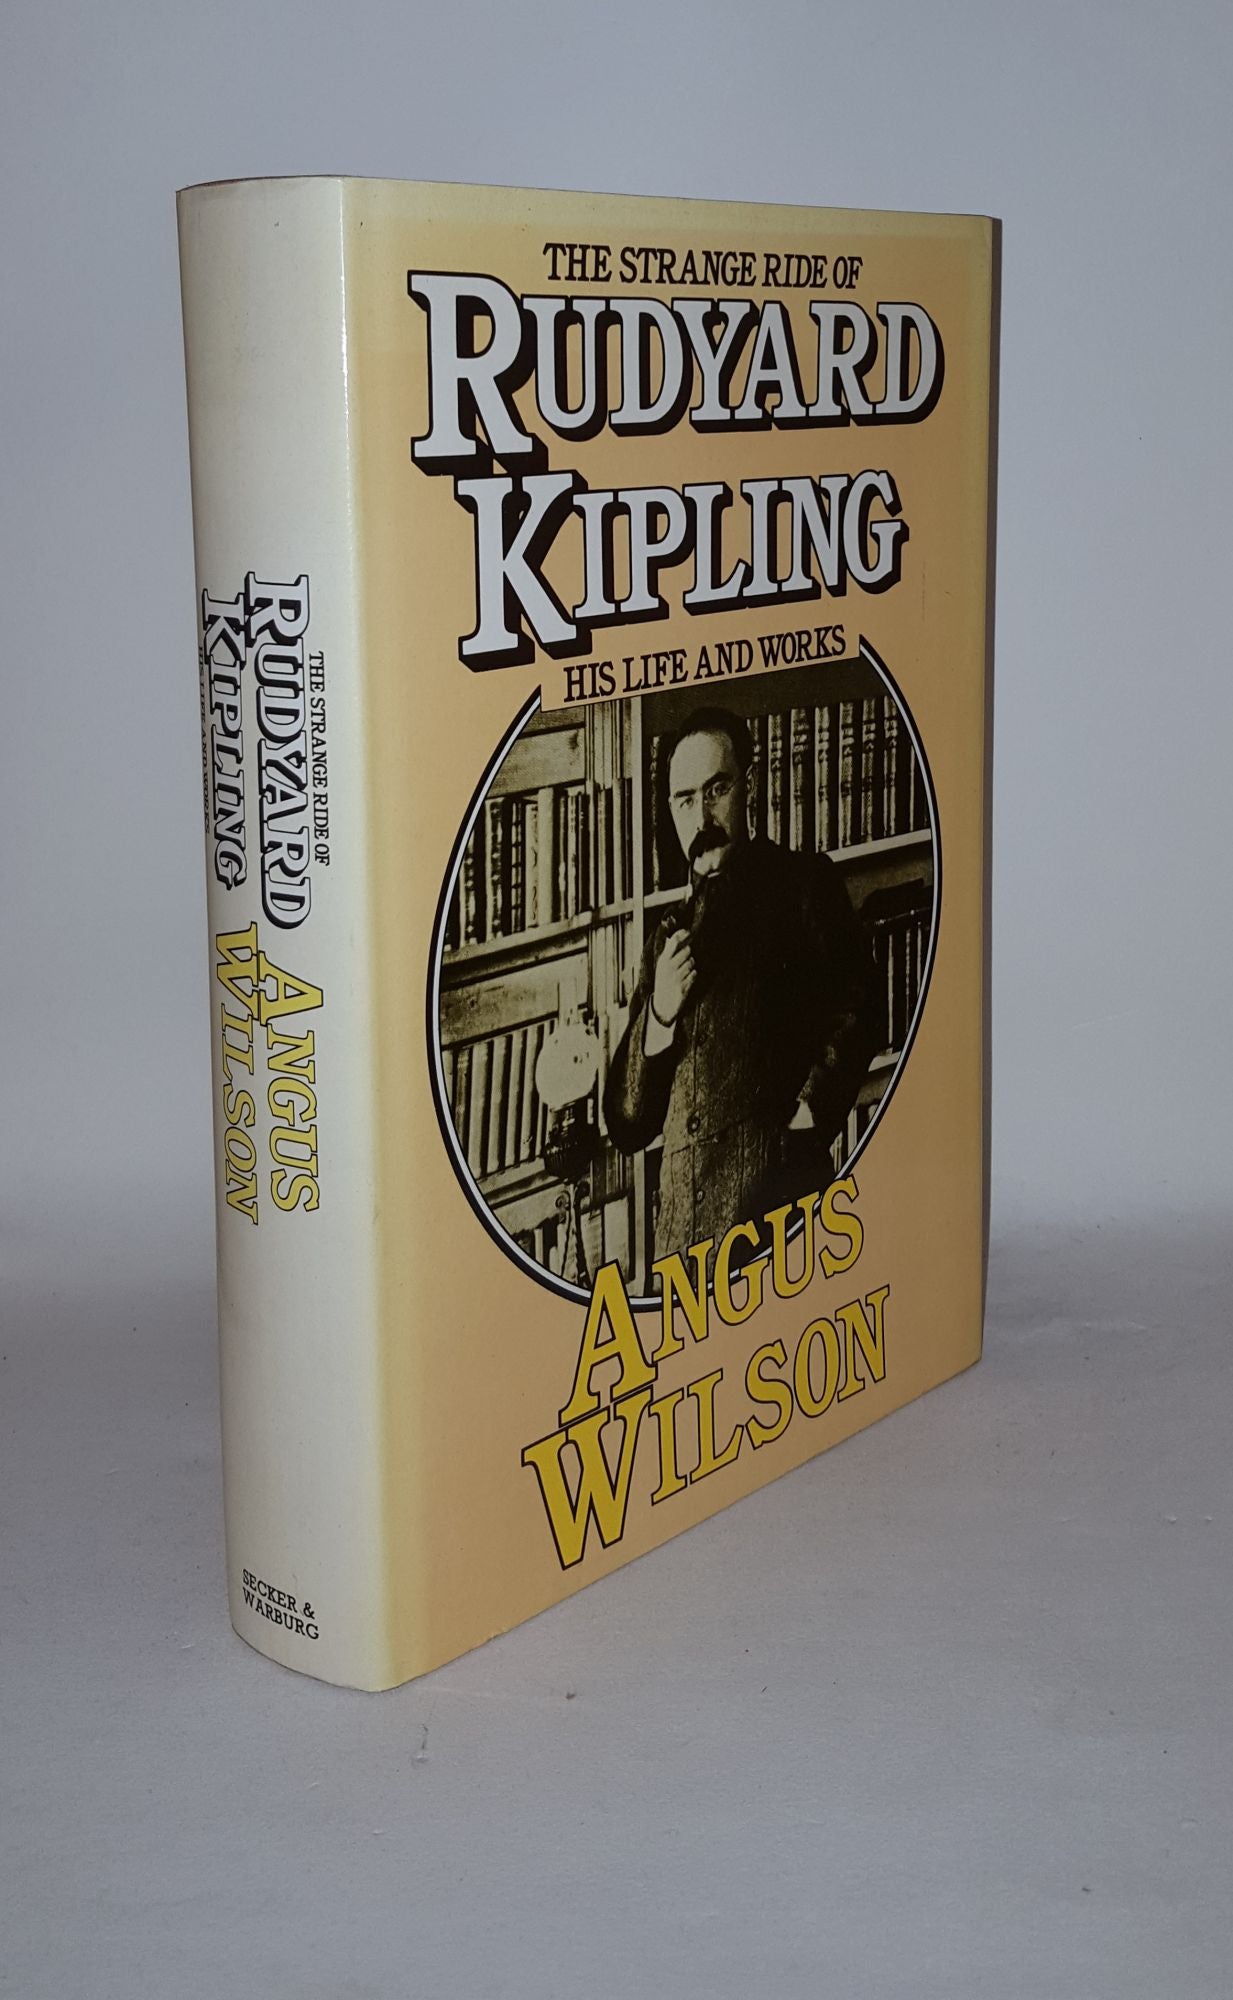 WILSON Angus - The Strange Ride of Rudyard Kipling His Life and Works